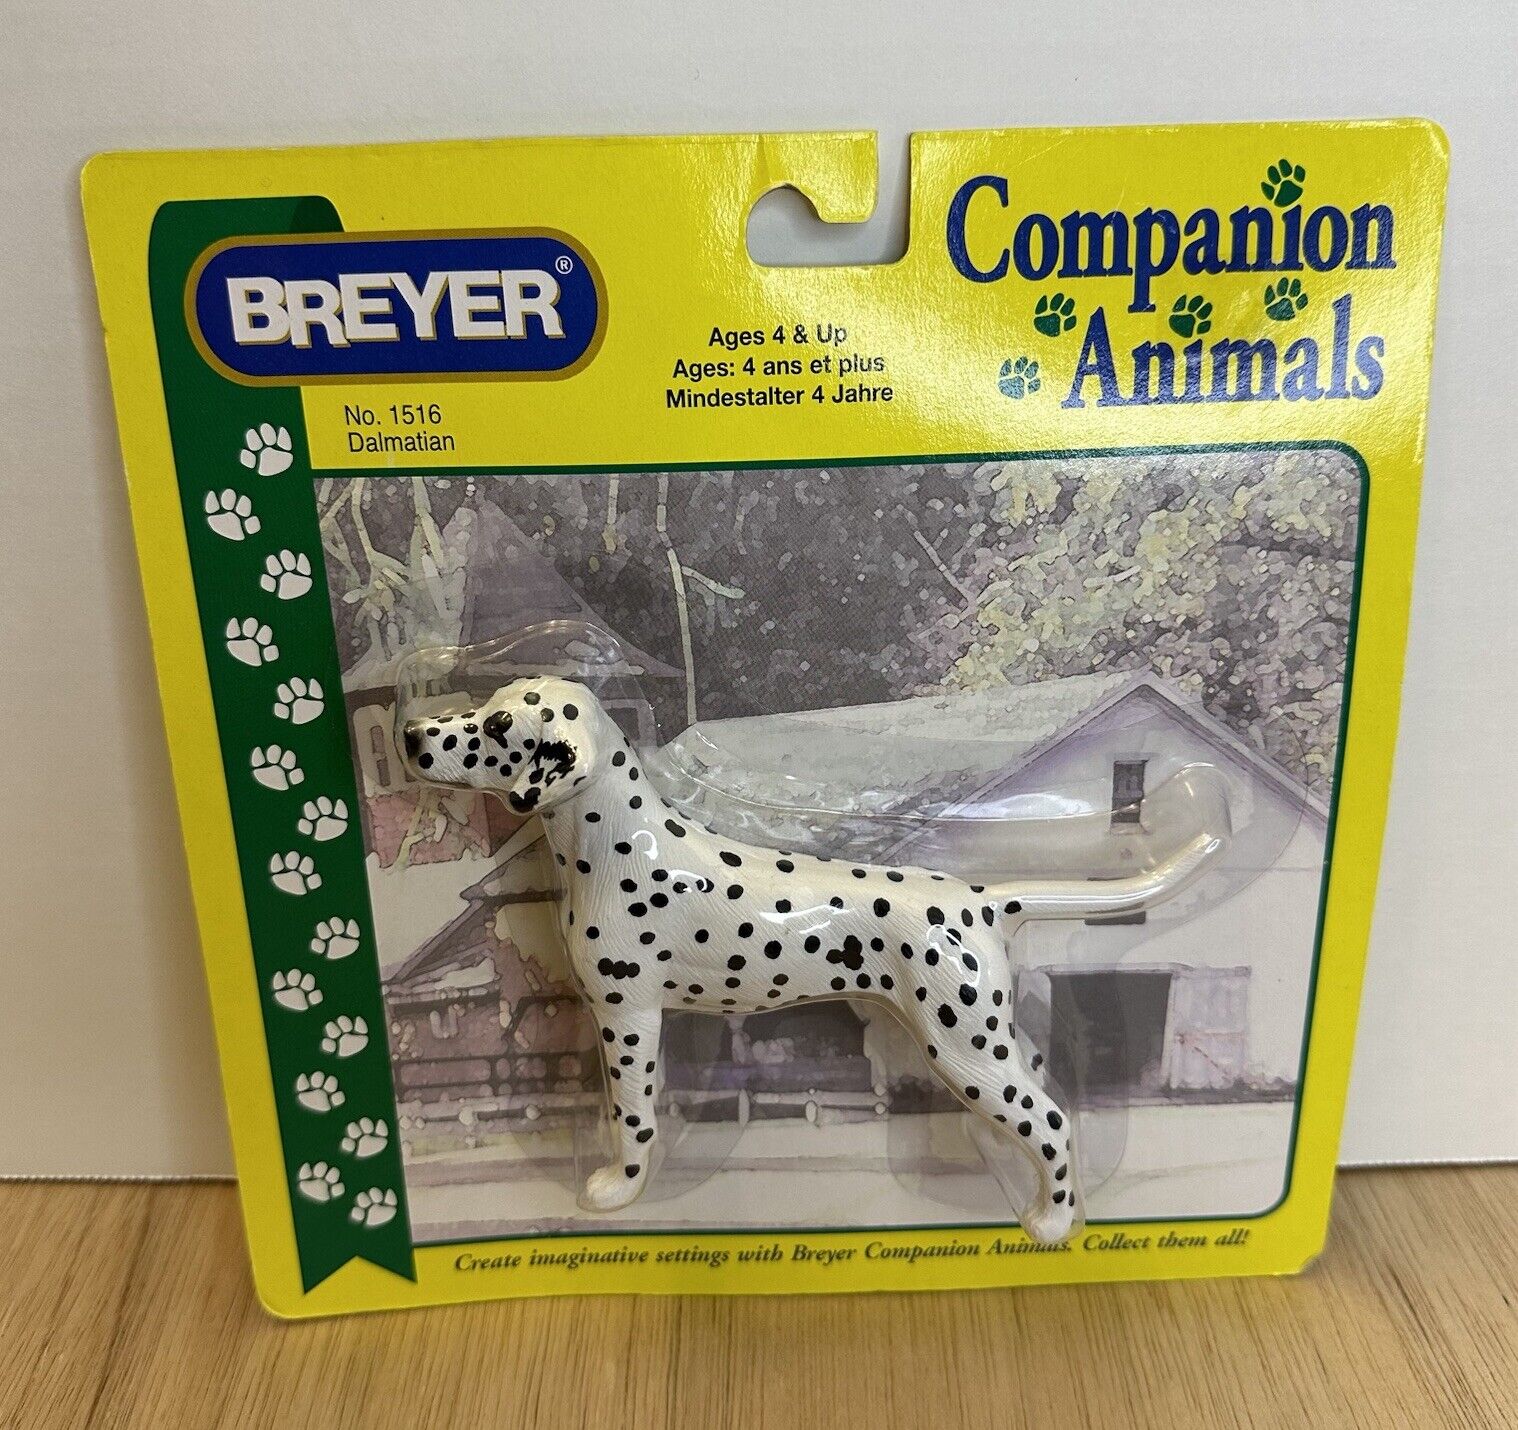 BREYER COMPANION ANIMALS RETIRED #1516 DALMATIAN BRAND NEW 